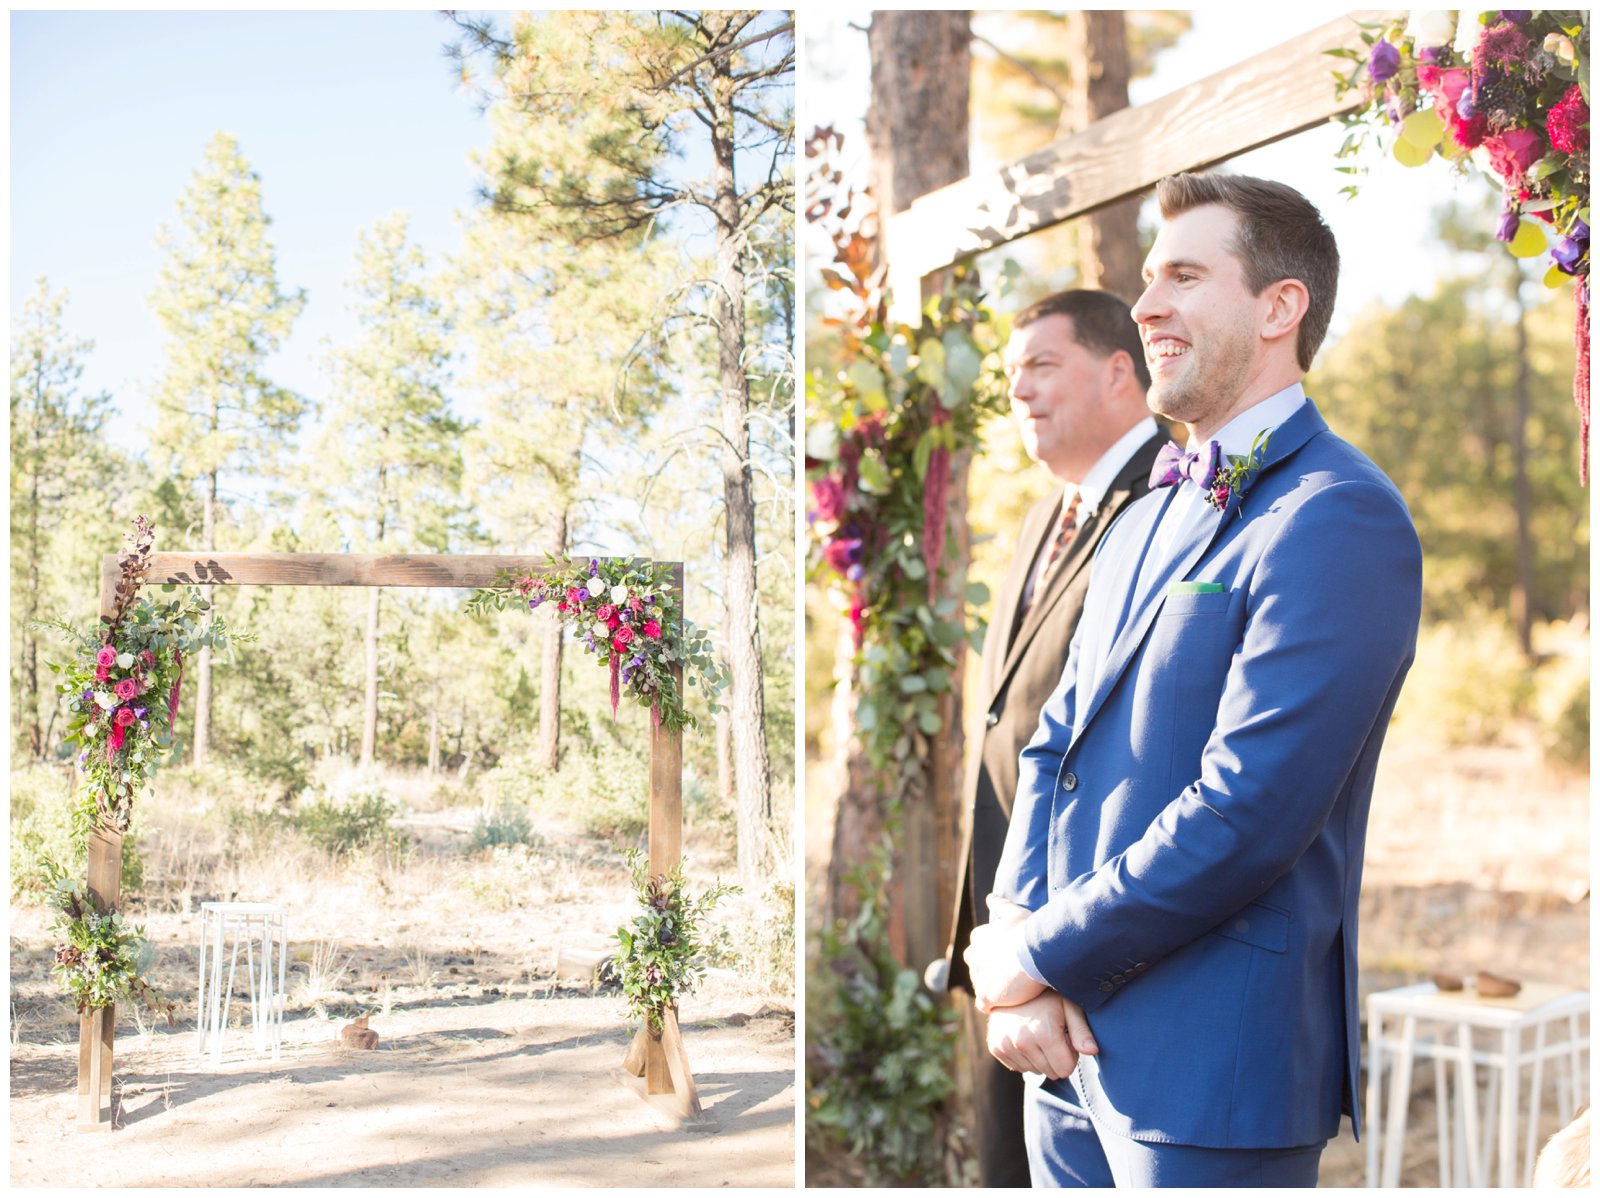 Wedding Ceremony at Strawberry Payson Arizona 